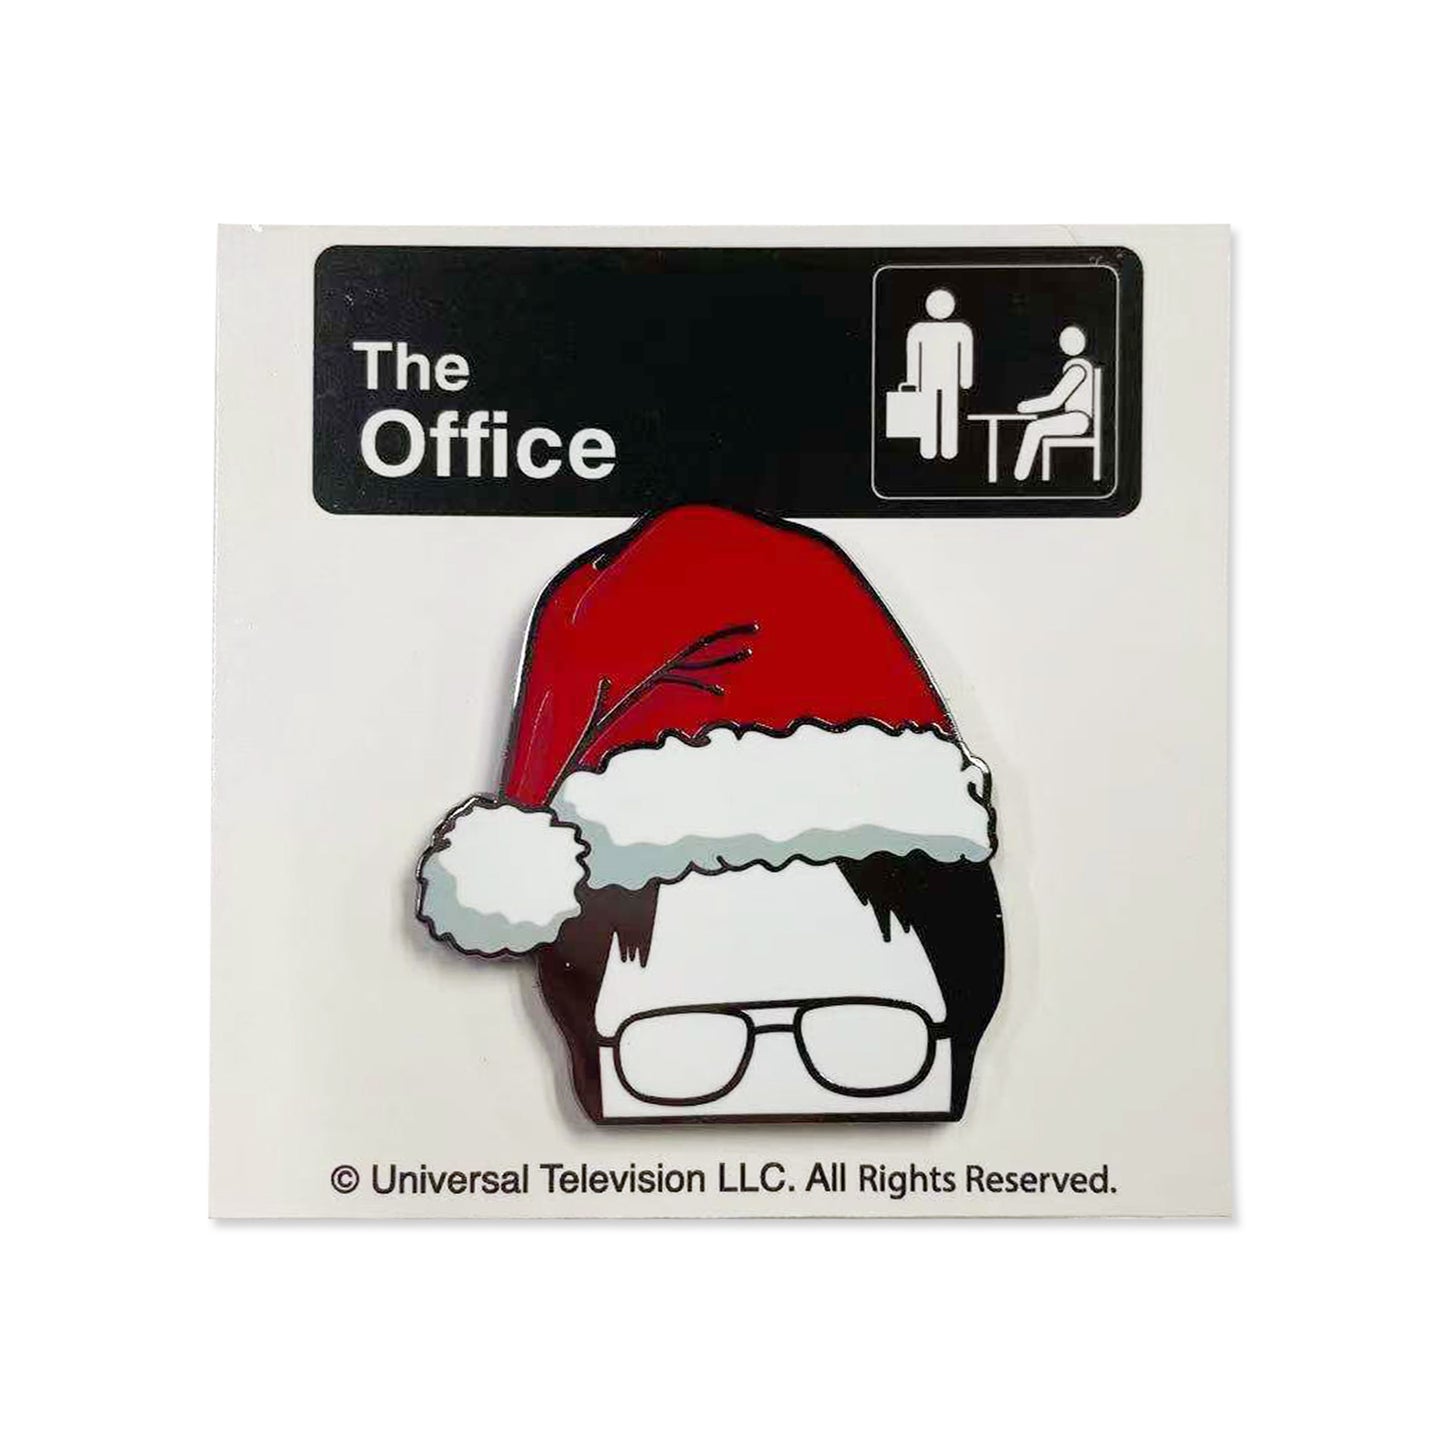 The Office Ultimate Holiday Bundle: Funko Advent Calendar, Mug, Pin, and Lanyard